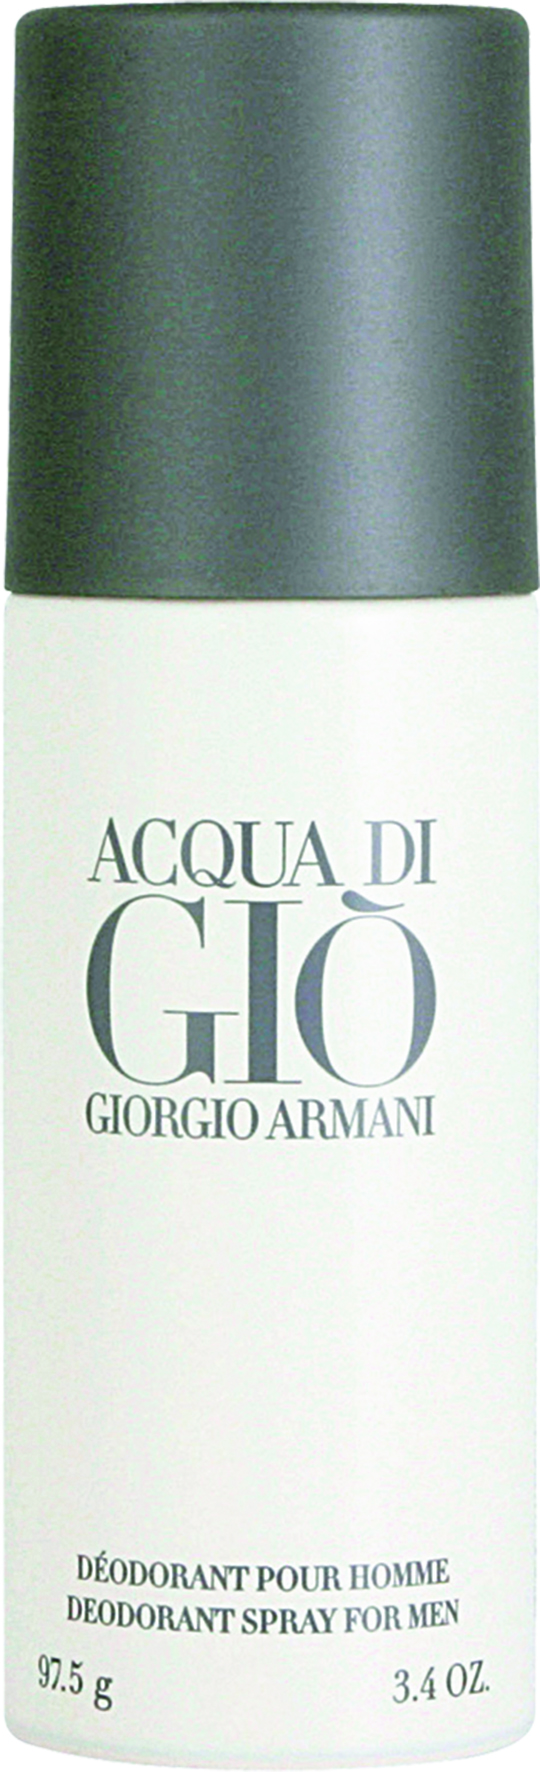 Giorgio Armani Acqua di Giò Deodorant Spray ml | lyko.com